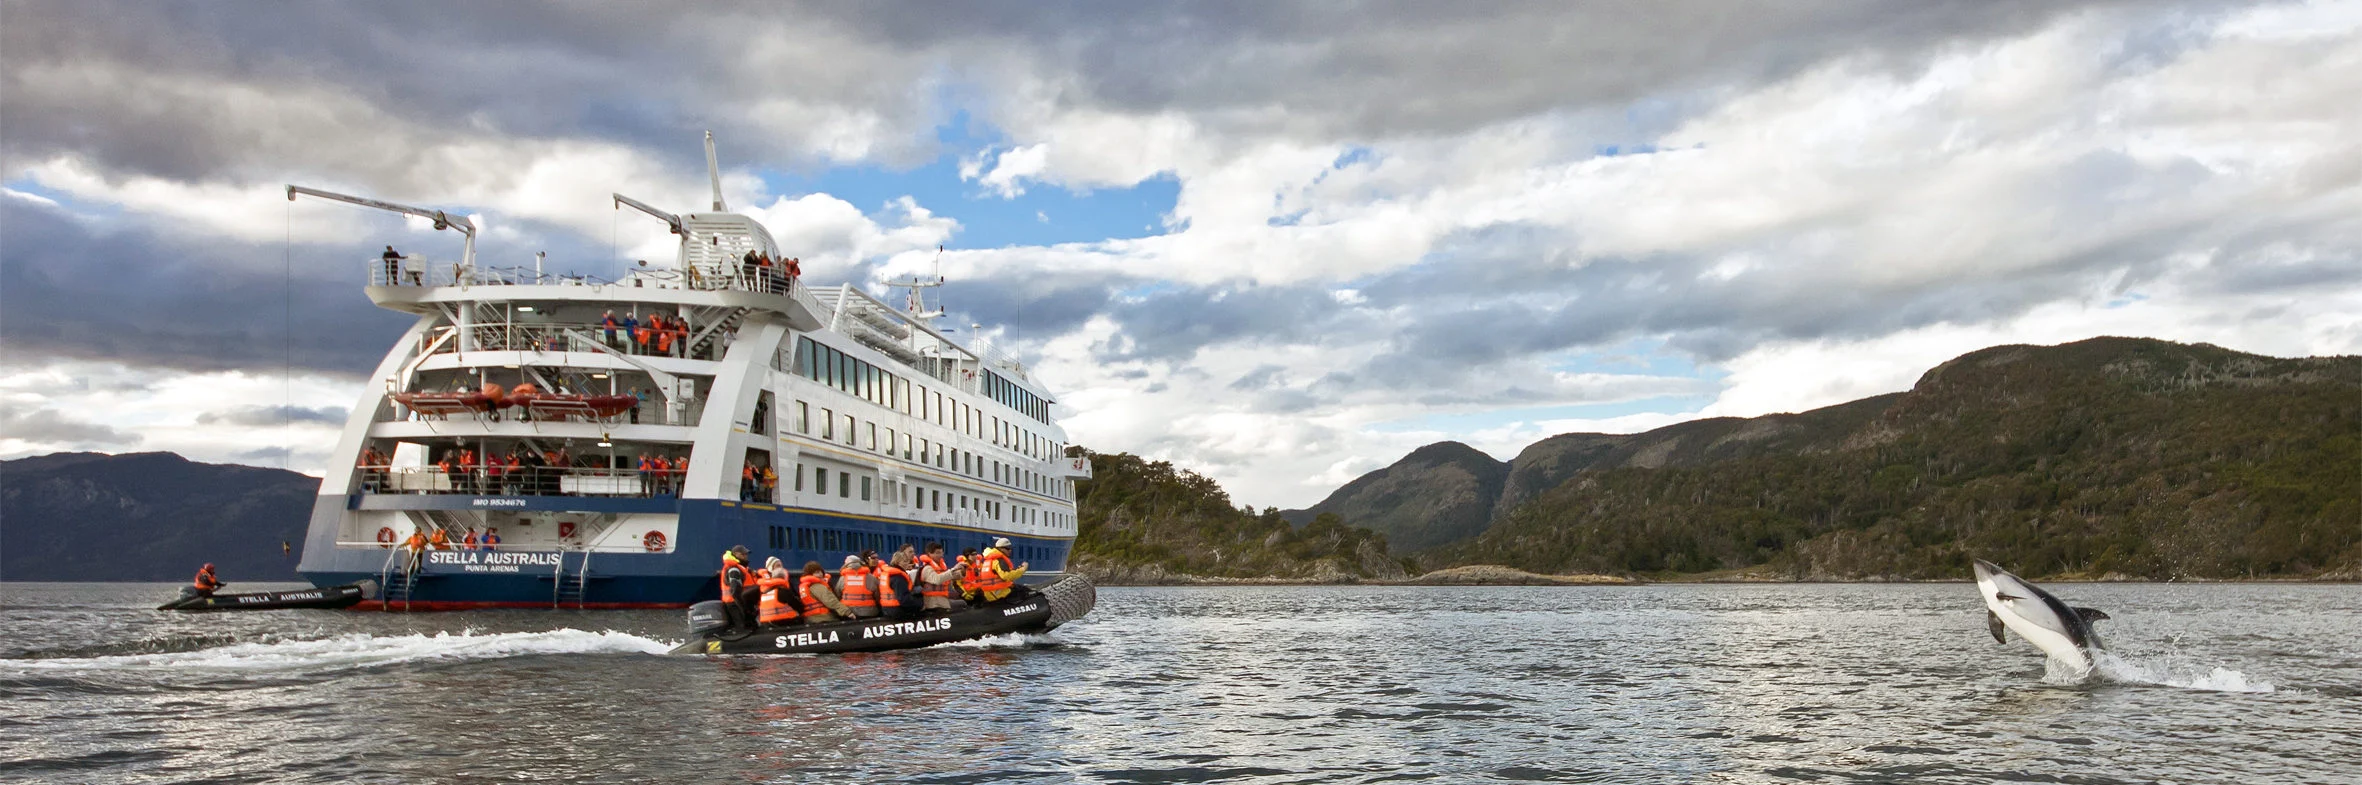 Catamaran: Cruceros Iguazu in Argentina, South America | Excursions - Rated 4.6